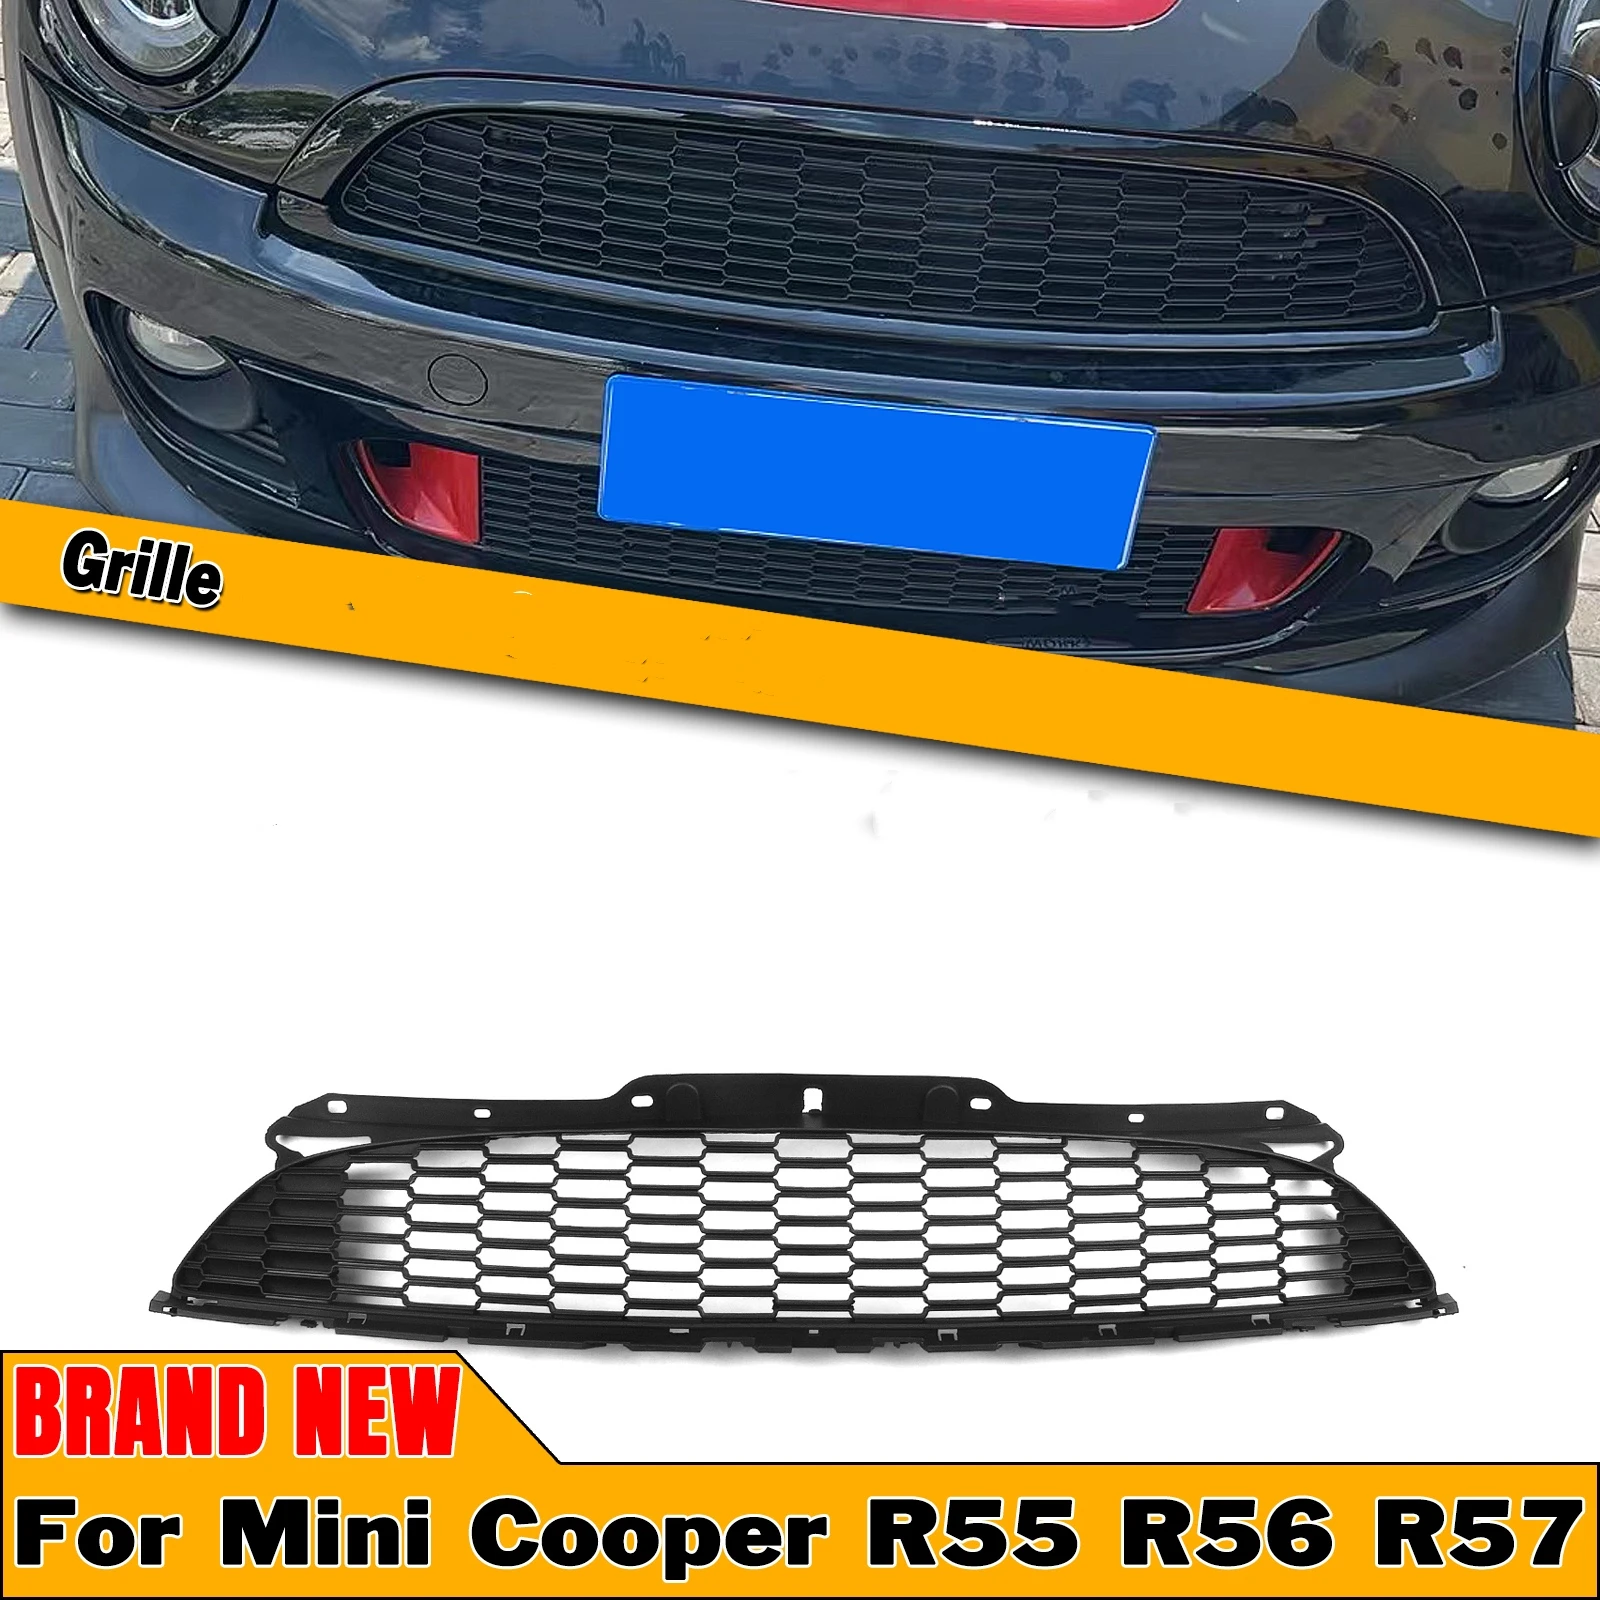 

Front Grille Racing Grills For Mini Cooper S R55 R56 R57/R58/R59 2007-2015 Matte Black Car Upper Bumper Hood Cover Mesh Grid Kit